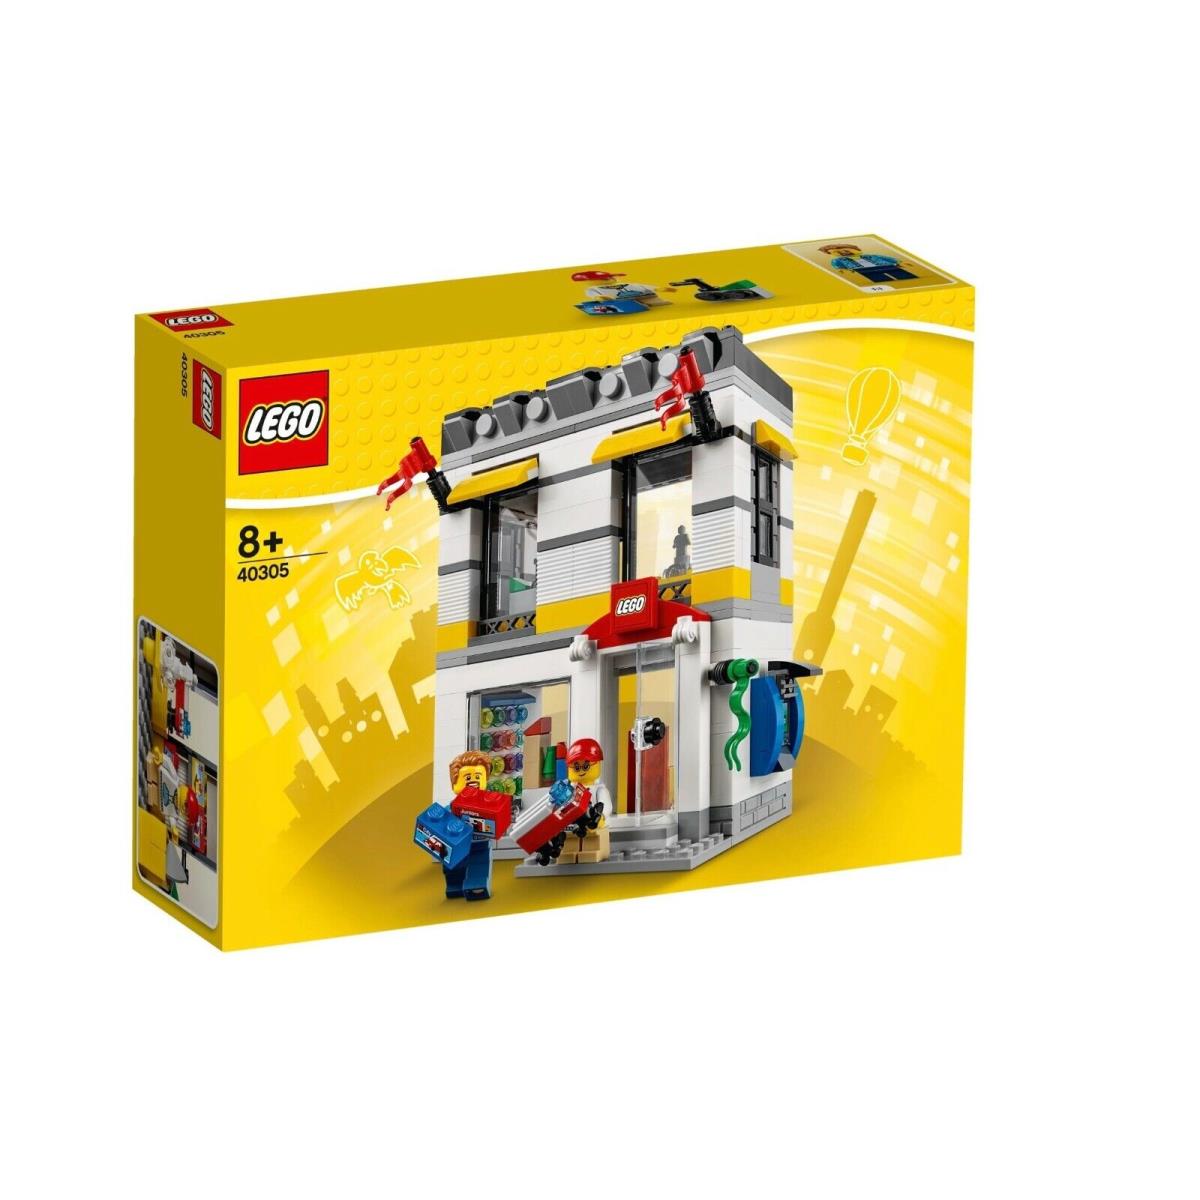 Lego: 40305 Microscale Brand Store